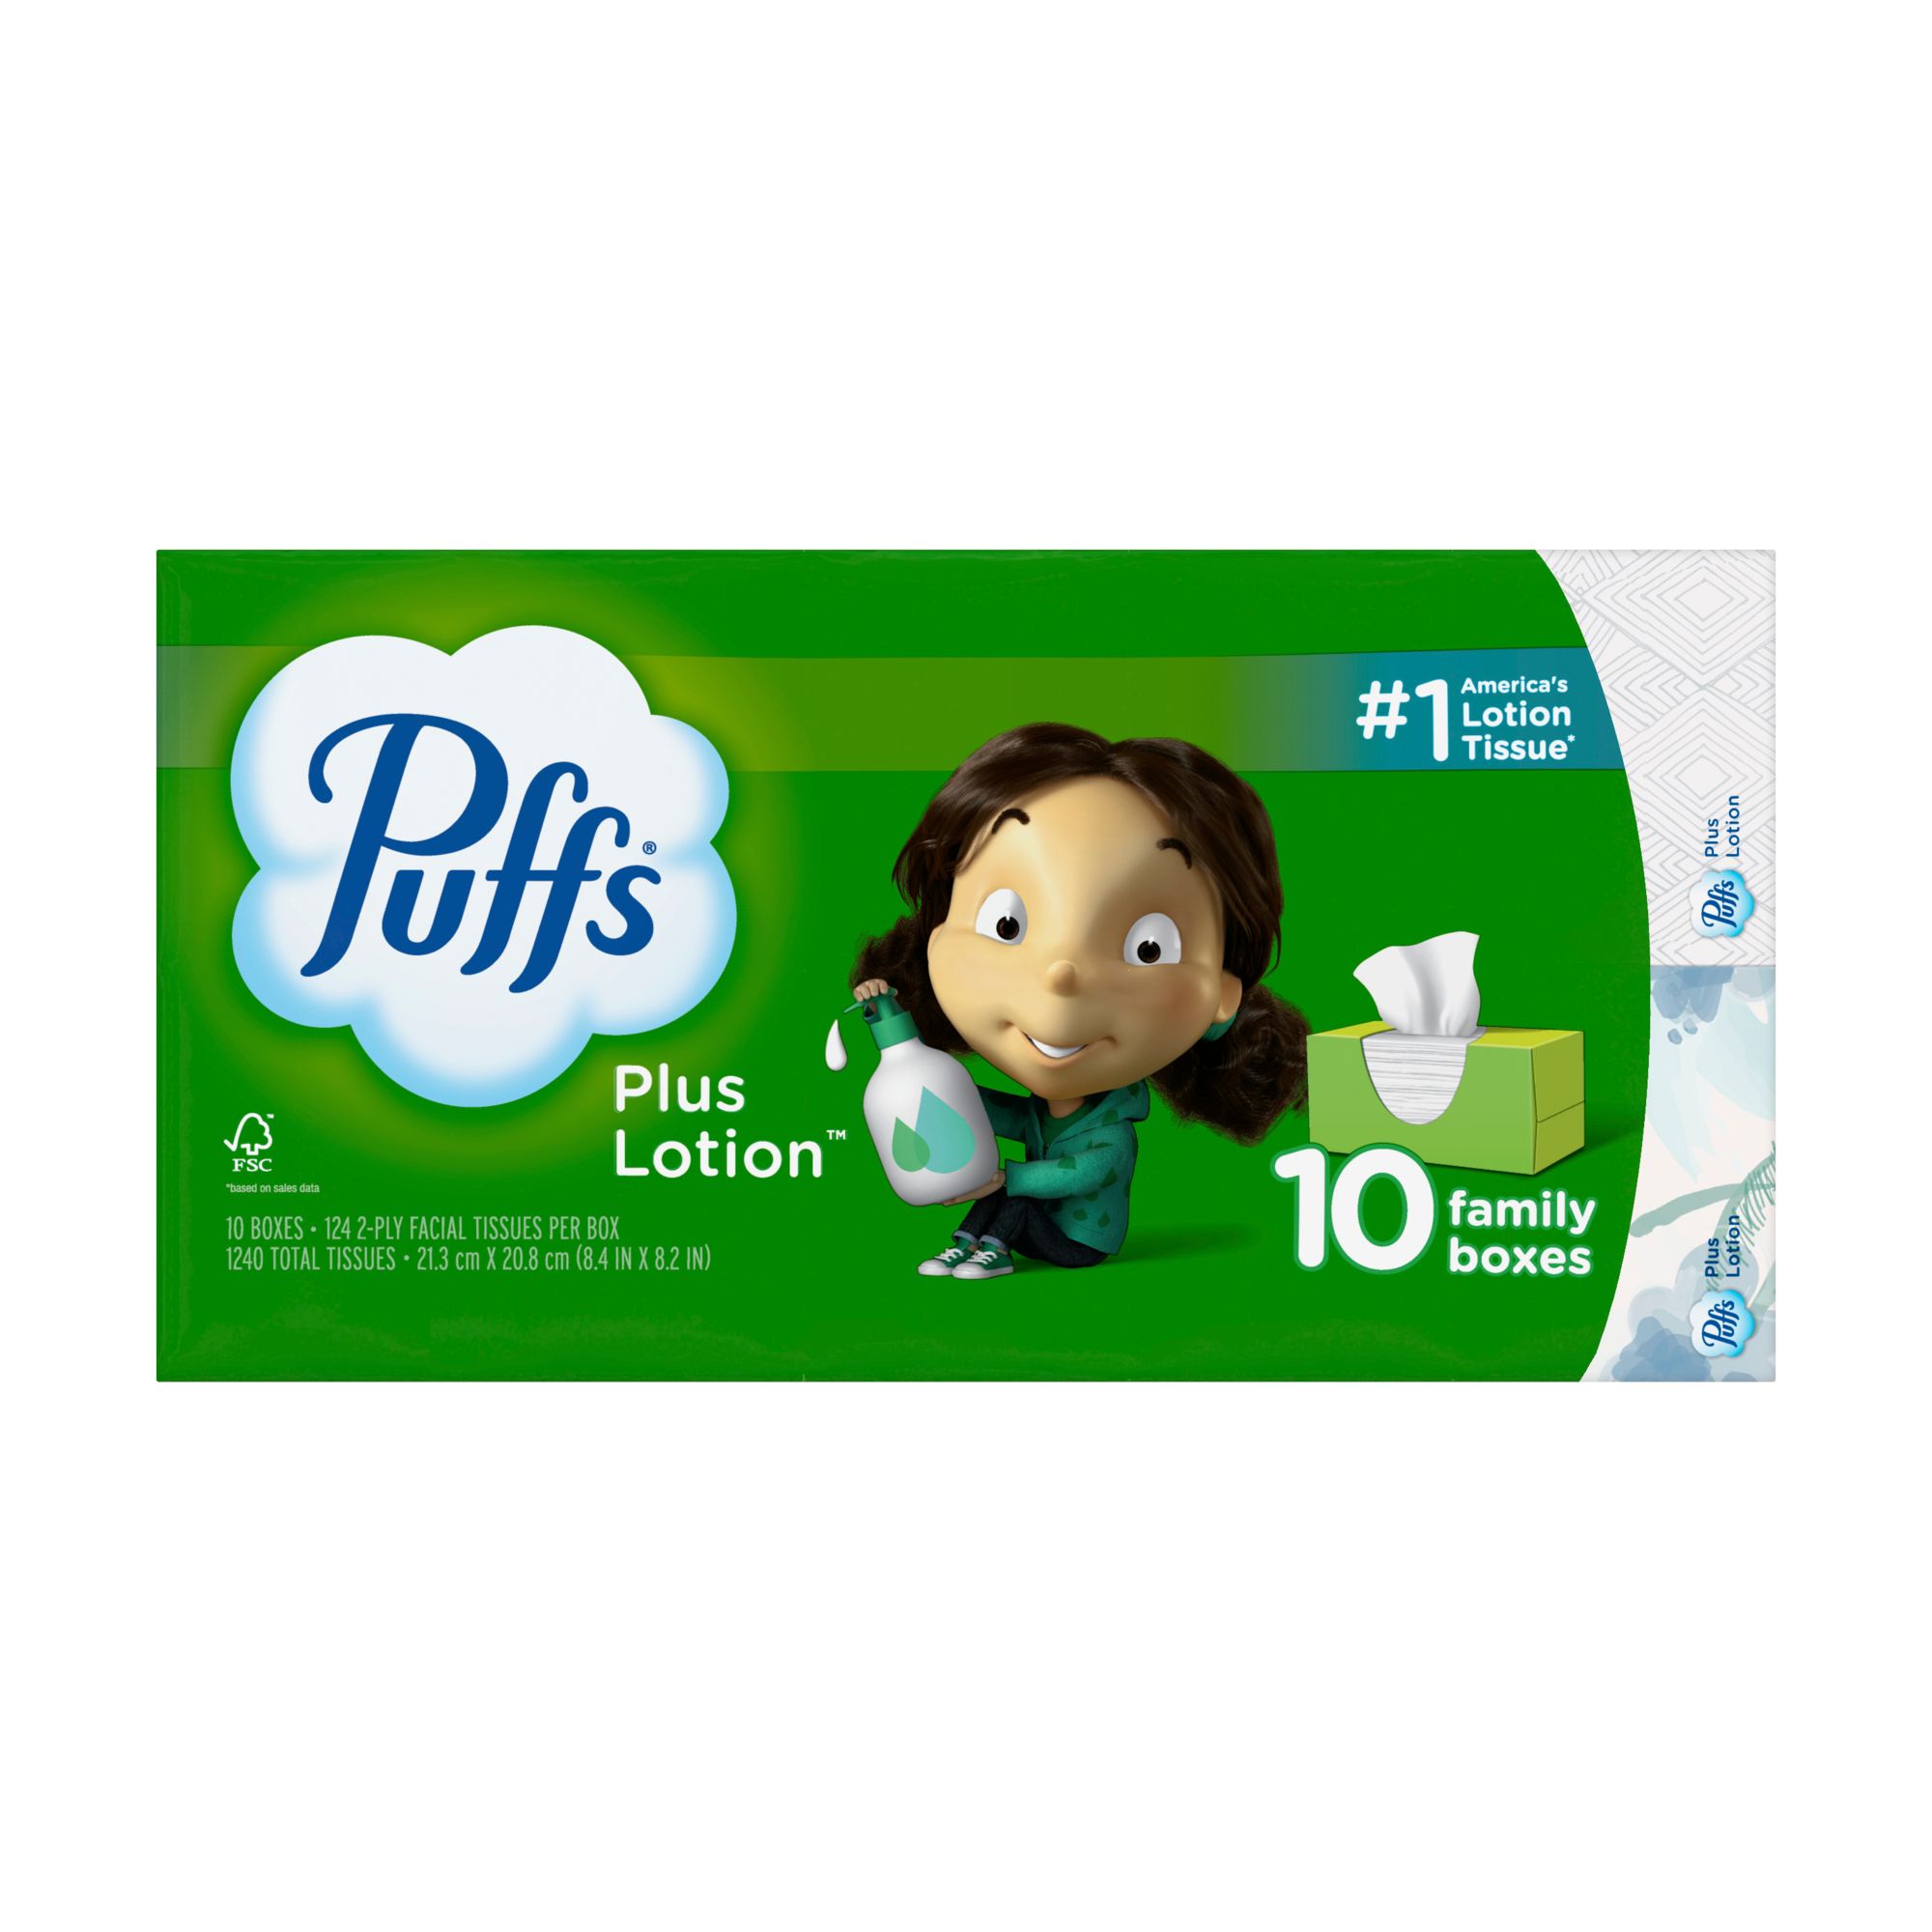 Puffs Plus Lotion Facial Tissue, 10 Family Boxes/124 Tissues Per Box